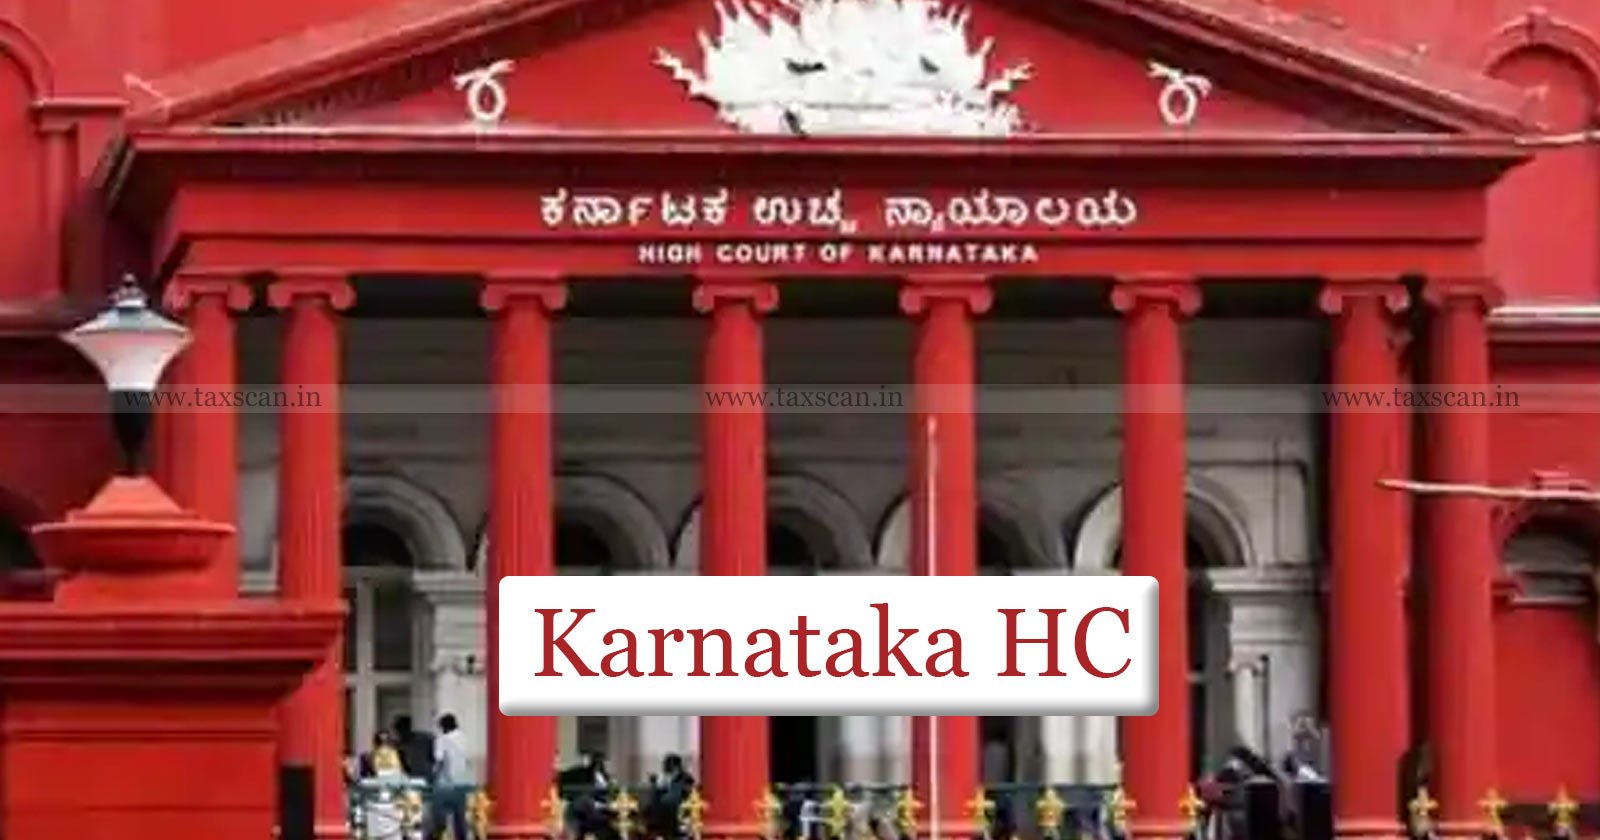 Requirement-Educational Institutions- Yearly Certificate- claim -Property -Tax Exemption- Karnataka HC-High Court-karnataa high court-taxscan